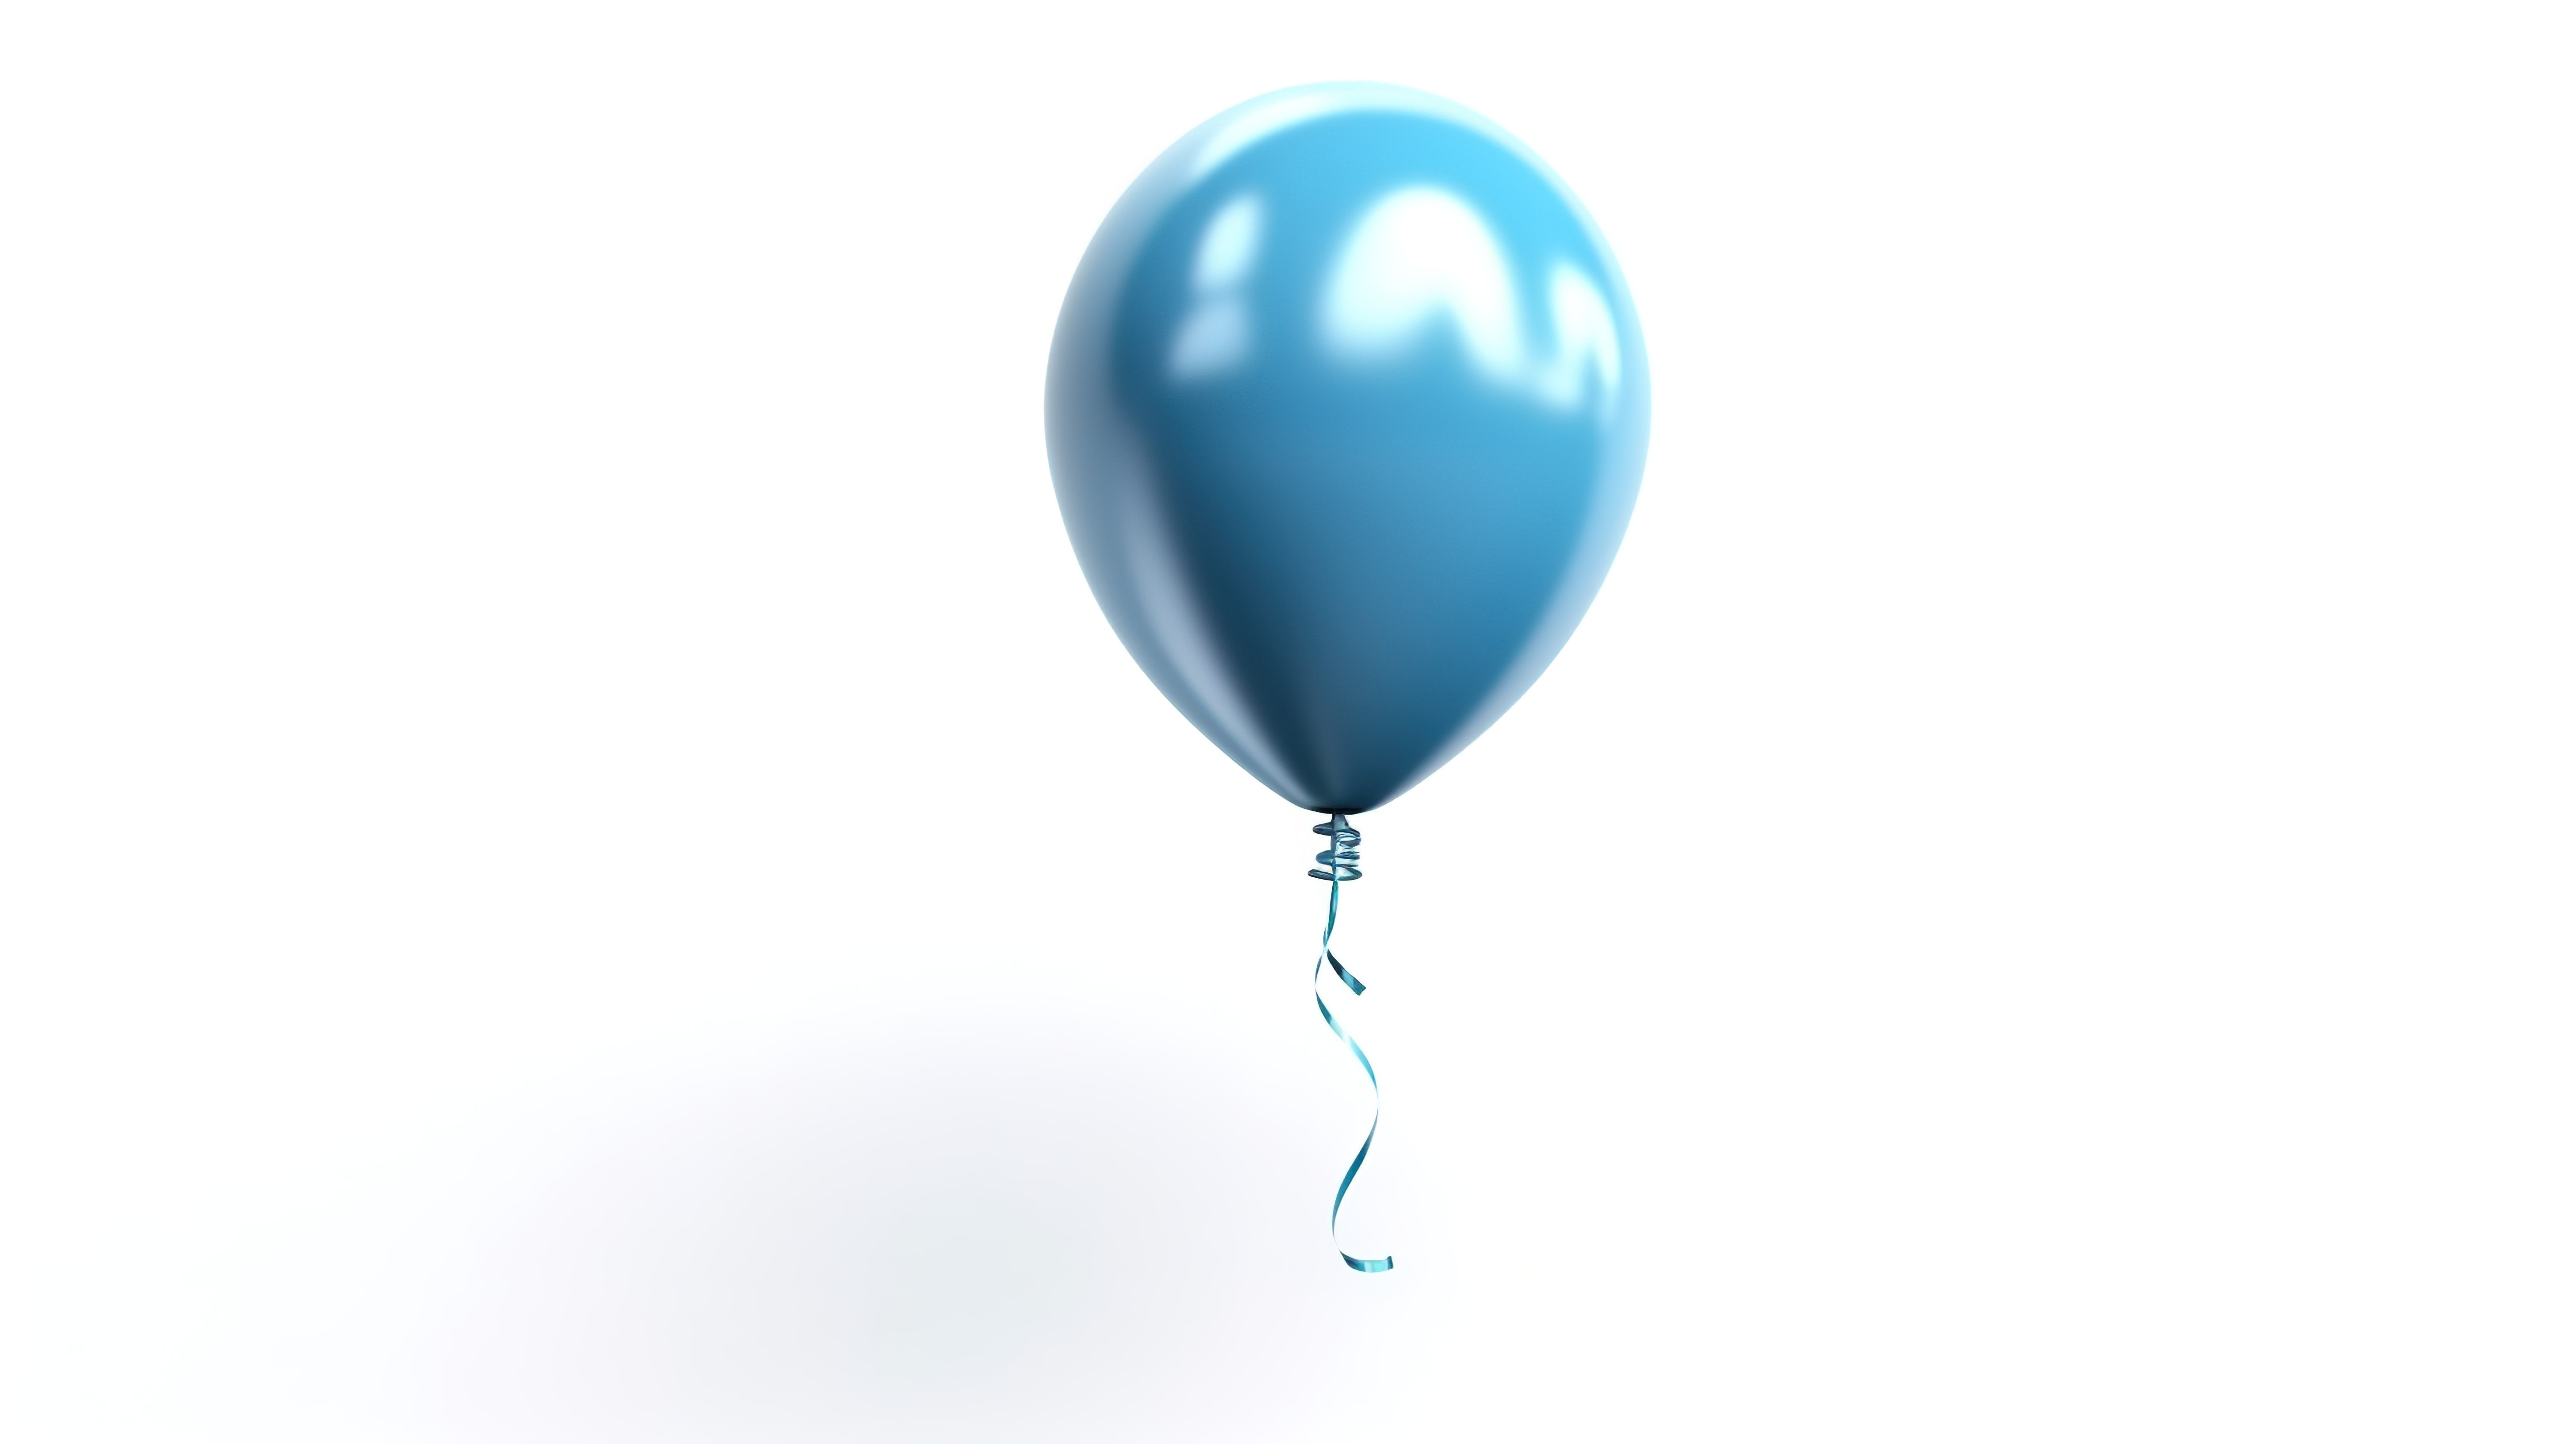 3d 渲染一个快乐的蓝色乳胶气球在白色背景上隔离的空气中翱翔图片